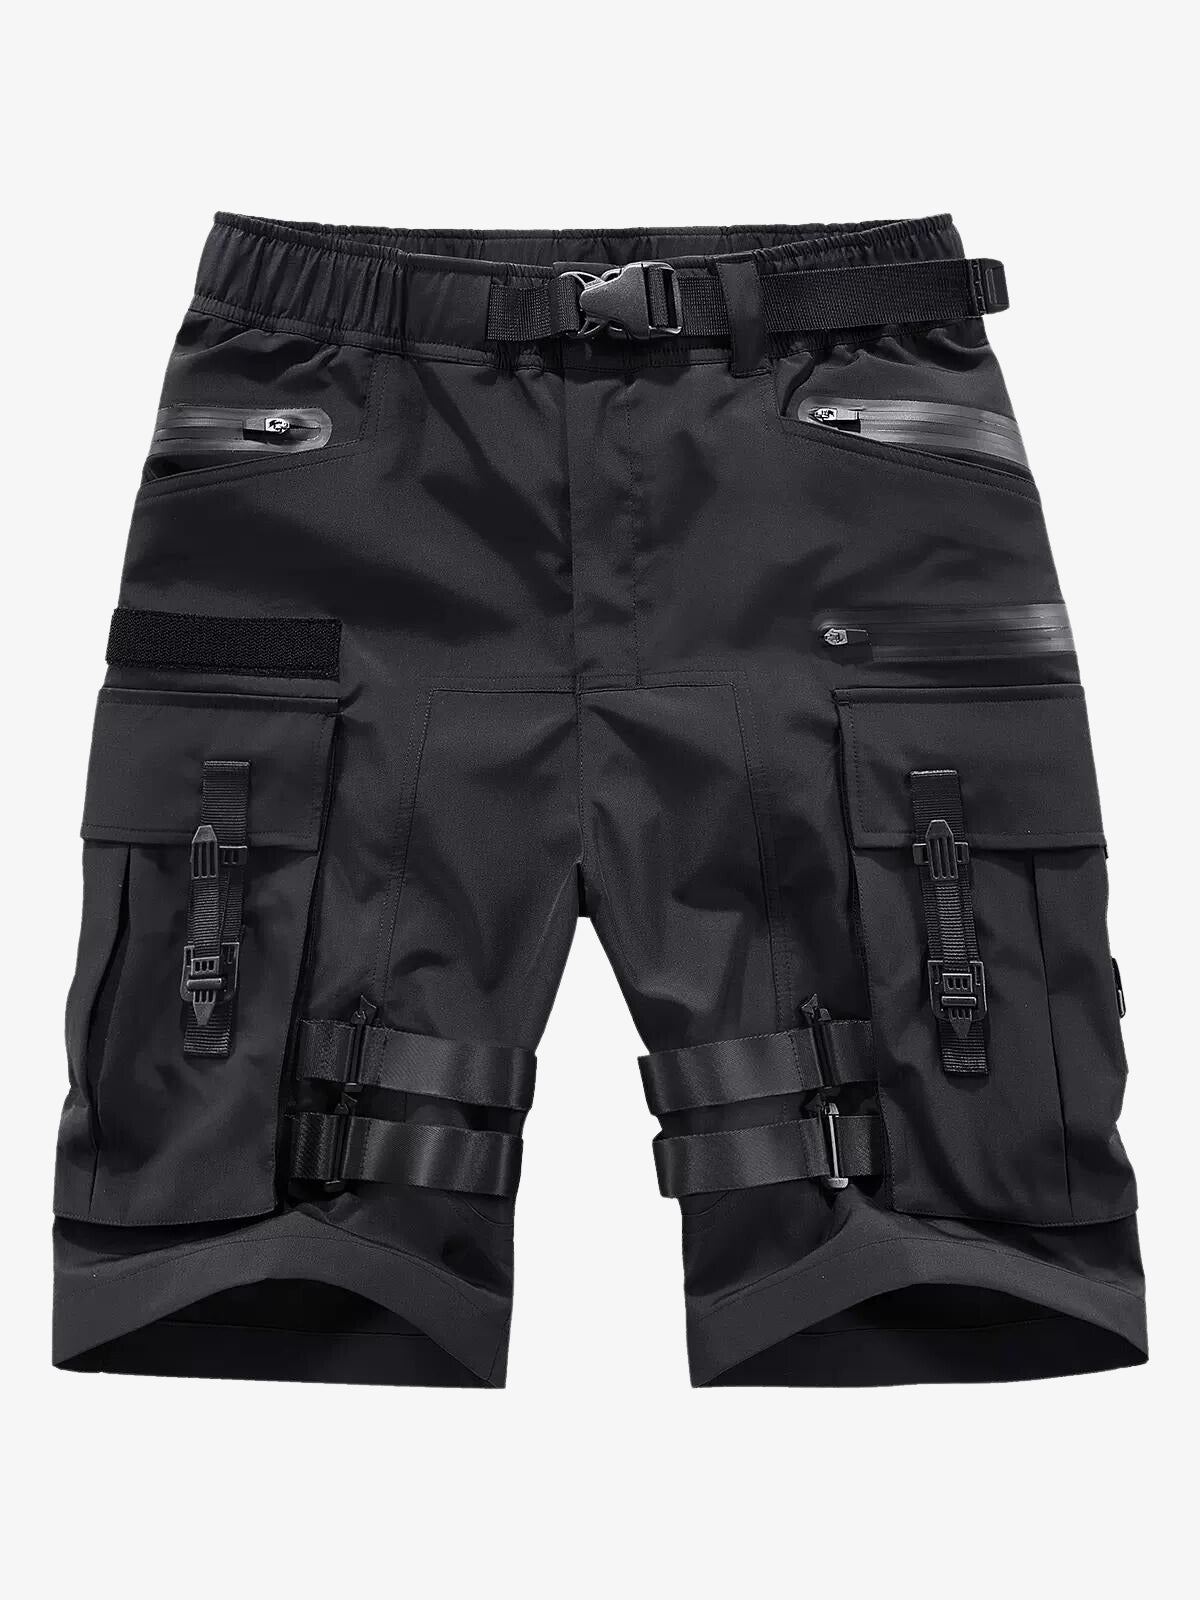 Men's Multi Pockets Futuristic Shorts